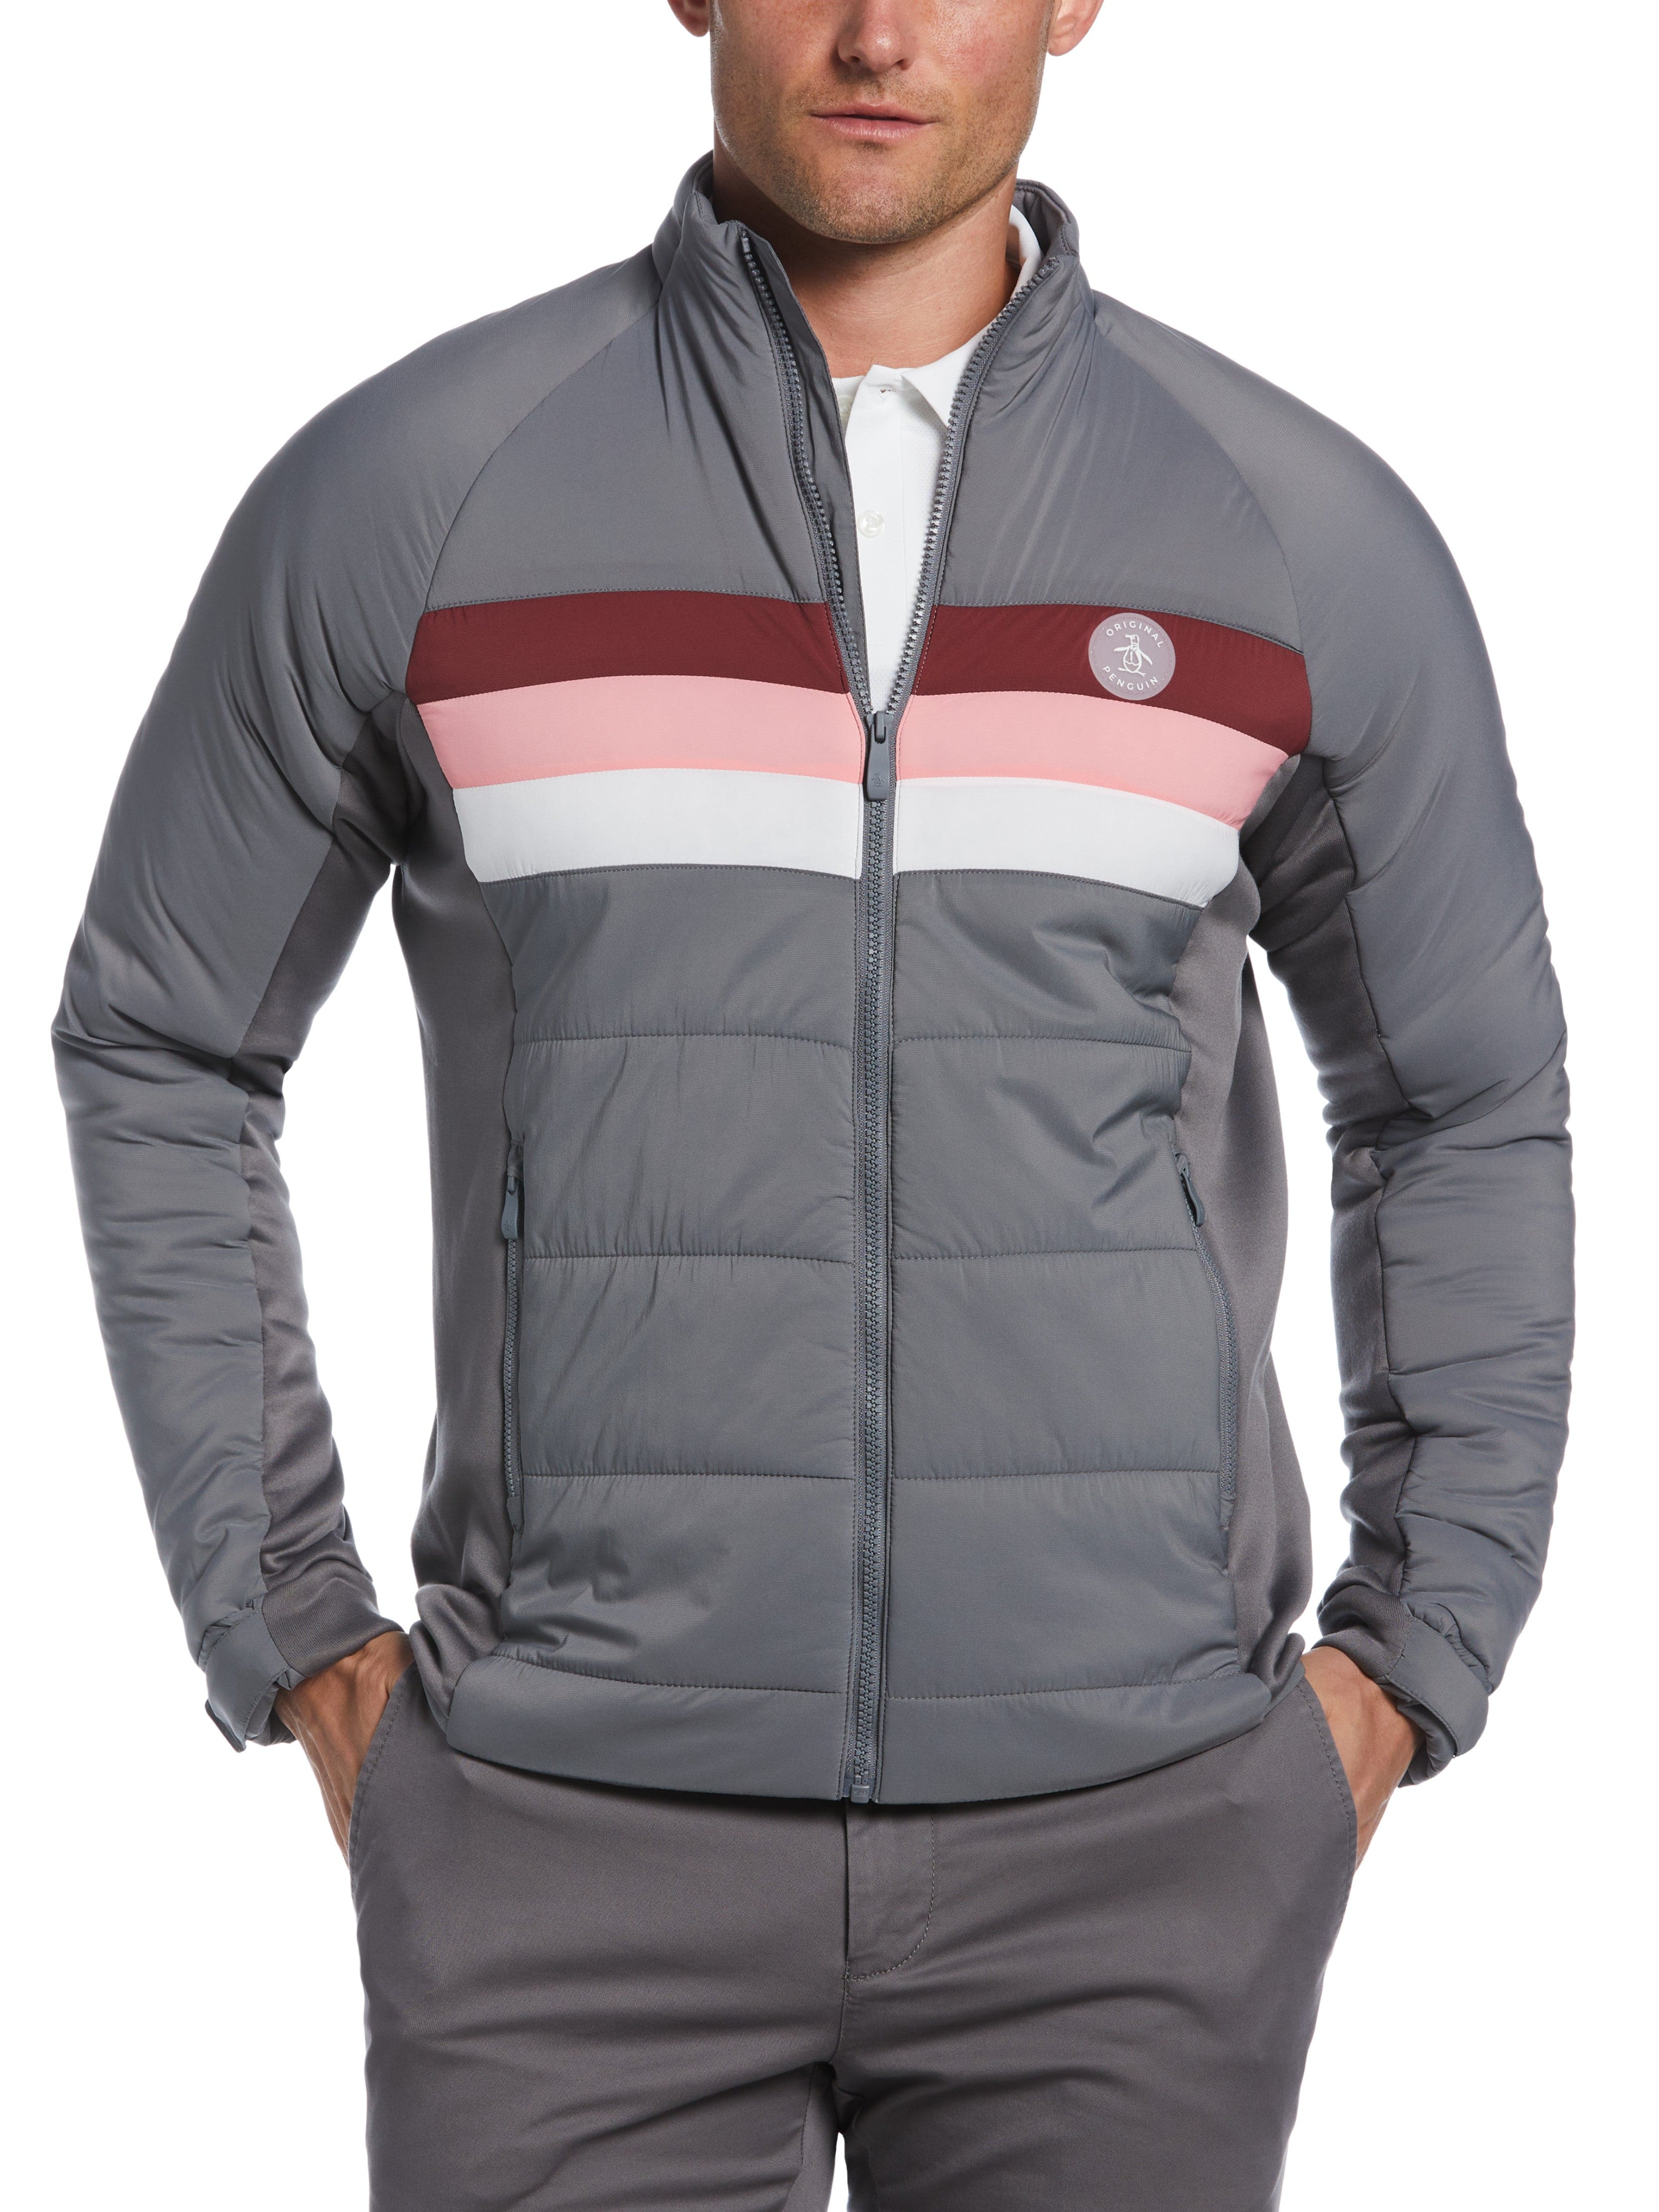 Original Penguin Mens Insulated 70s Golf Jacket Top, Size Large, Quiet Shade Gray, 100% Nylon | Golf Apparel Shop